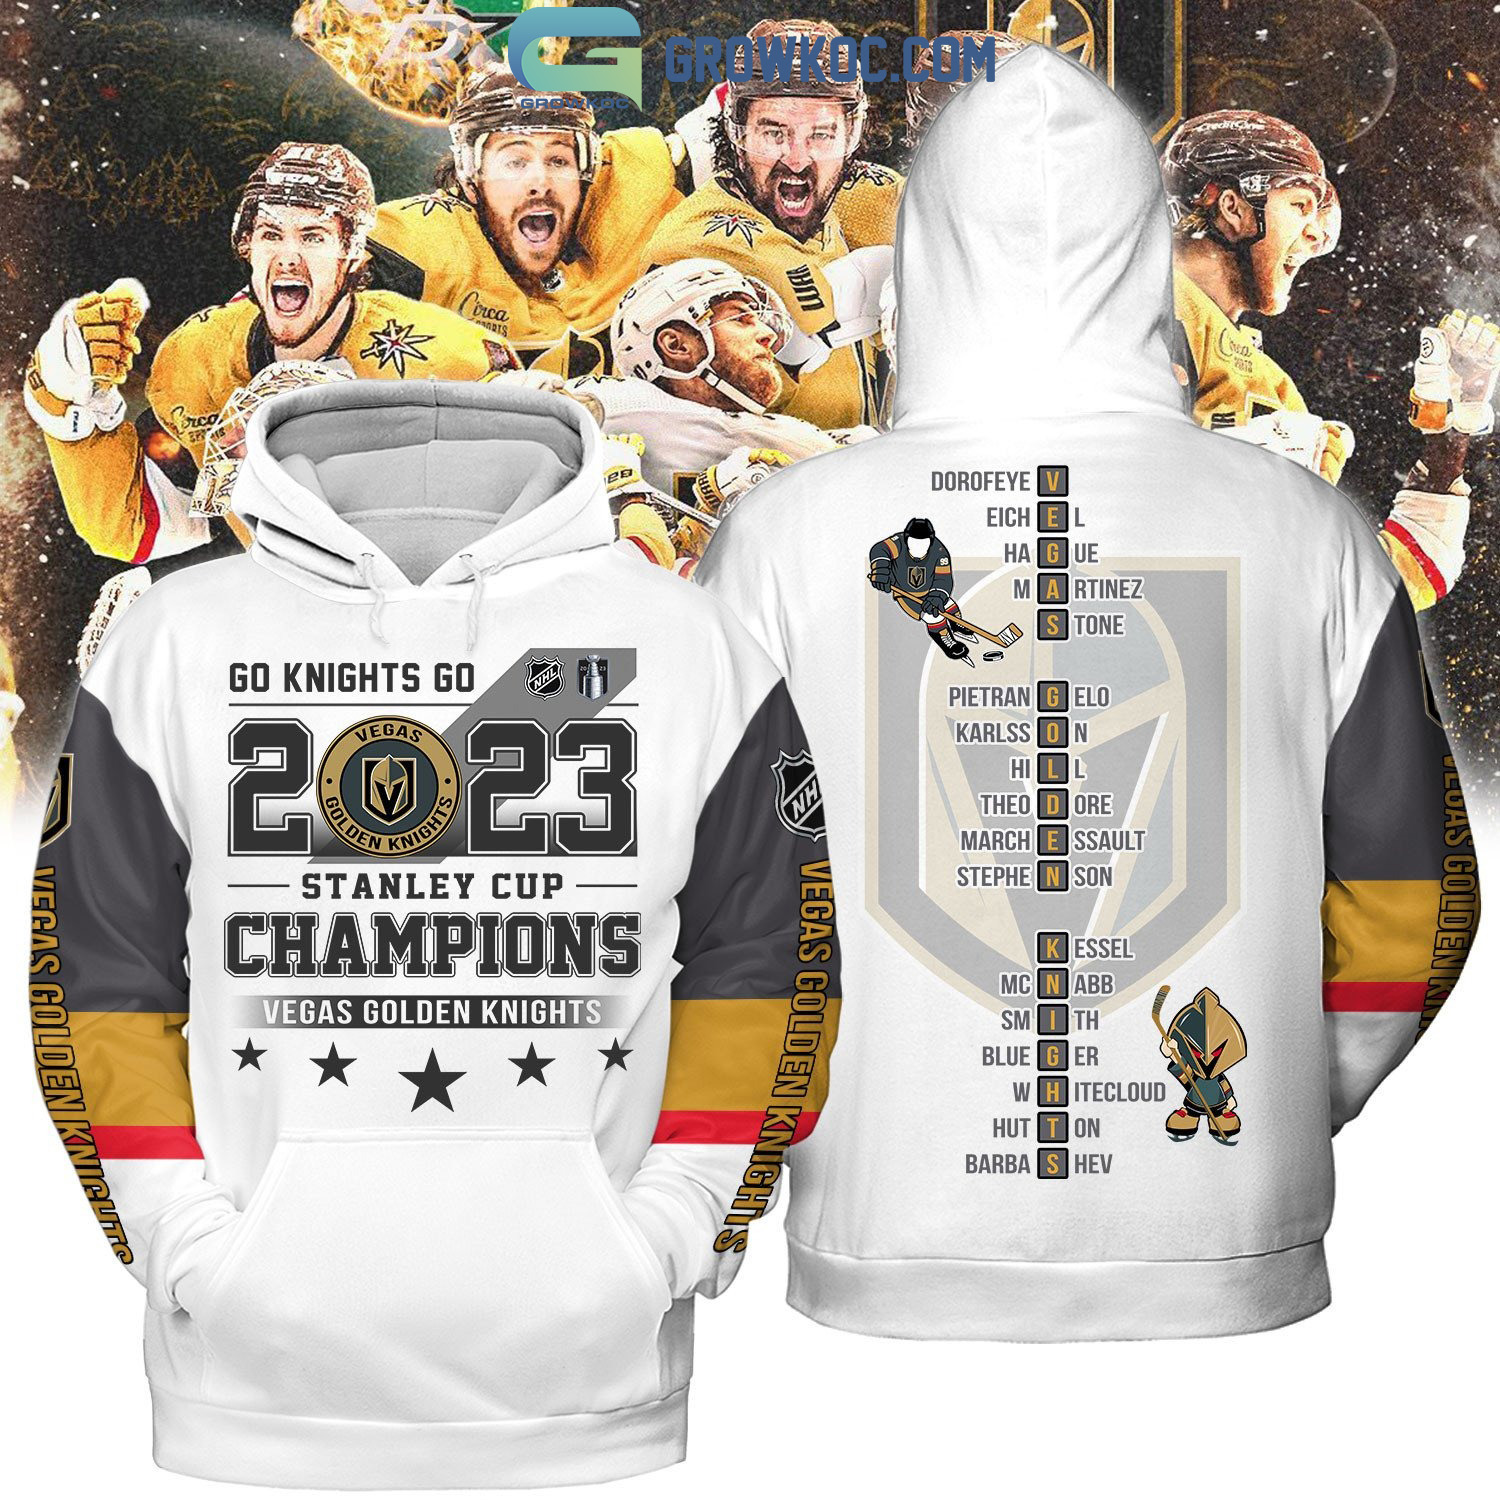 https://growkoc.com/wp-content/uploads/2023/06/2023-Go-Kinghts-Go-Stanley-Cup-Champions-Vegas-Golden-Knight-Best-Team-White-Design-Hoodie-T-Shirt2B1-593av.jpg